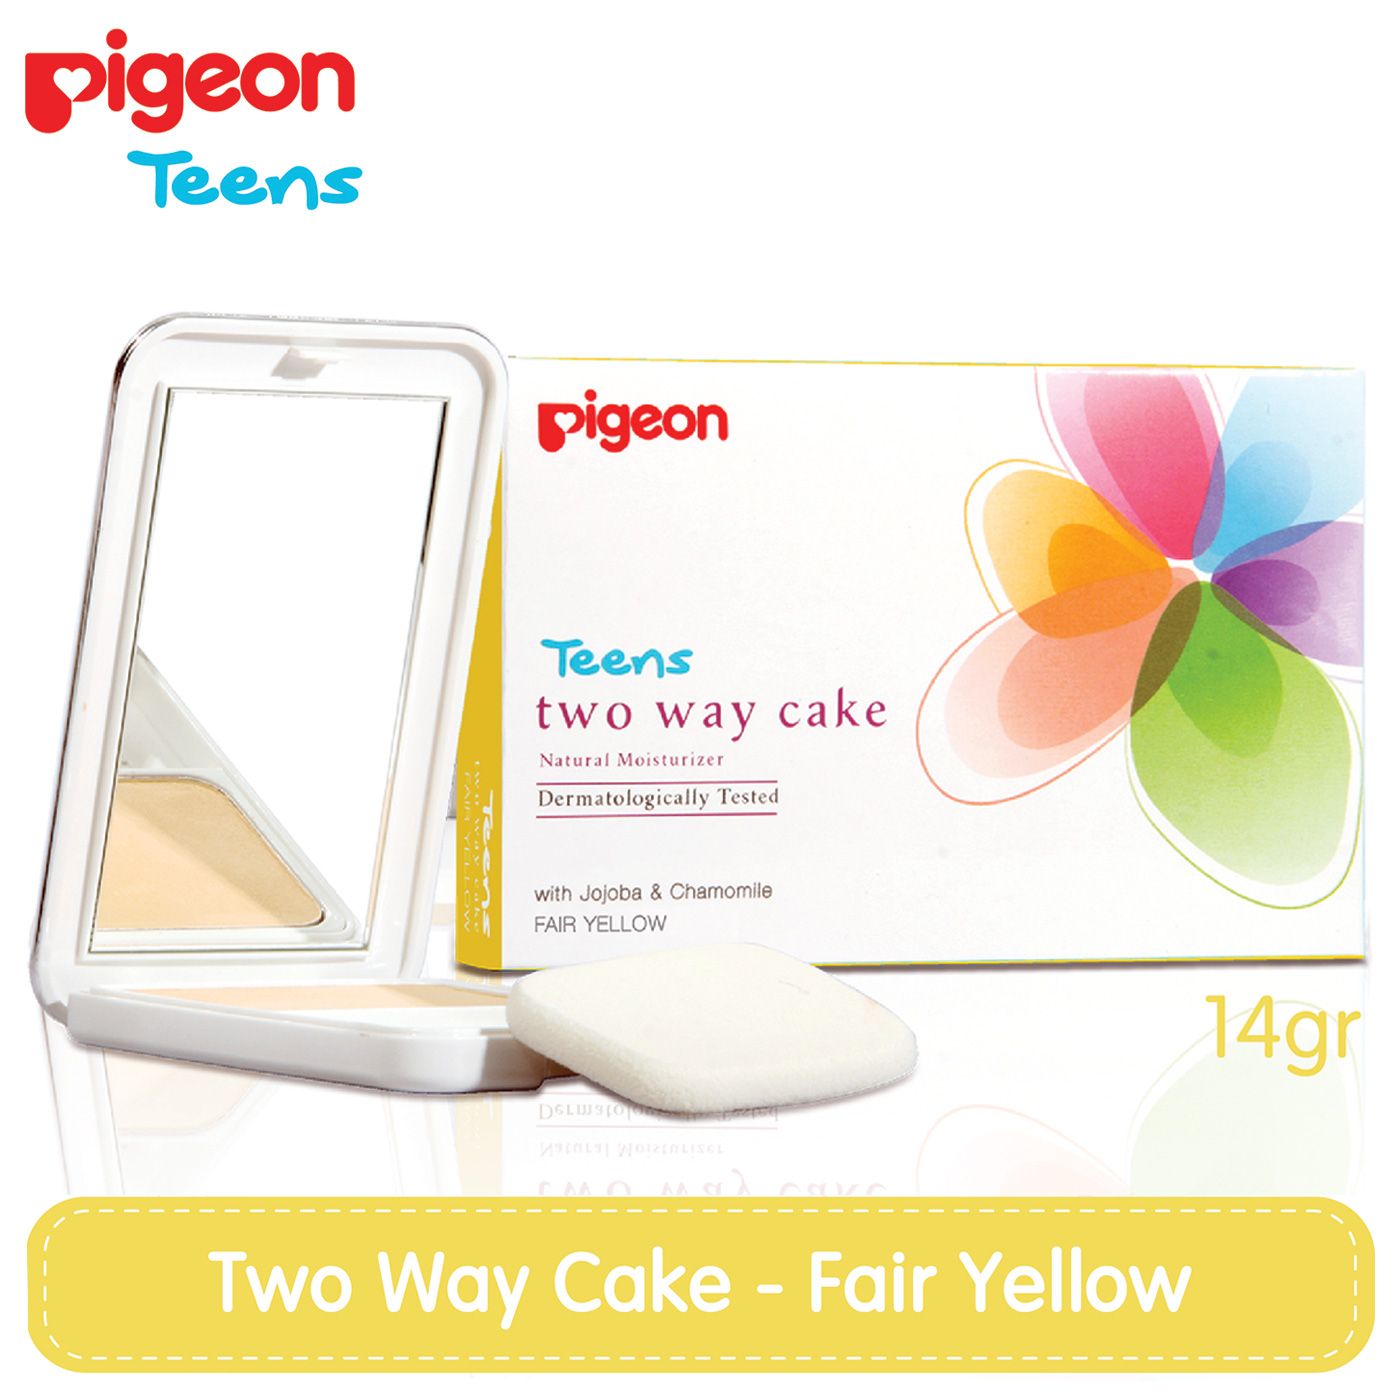 Pigeon Two Way Cake Fair Yellow (14g) - 1